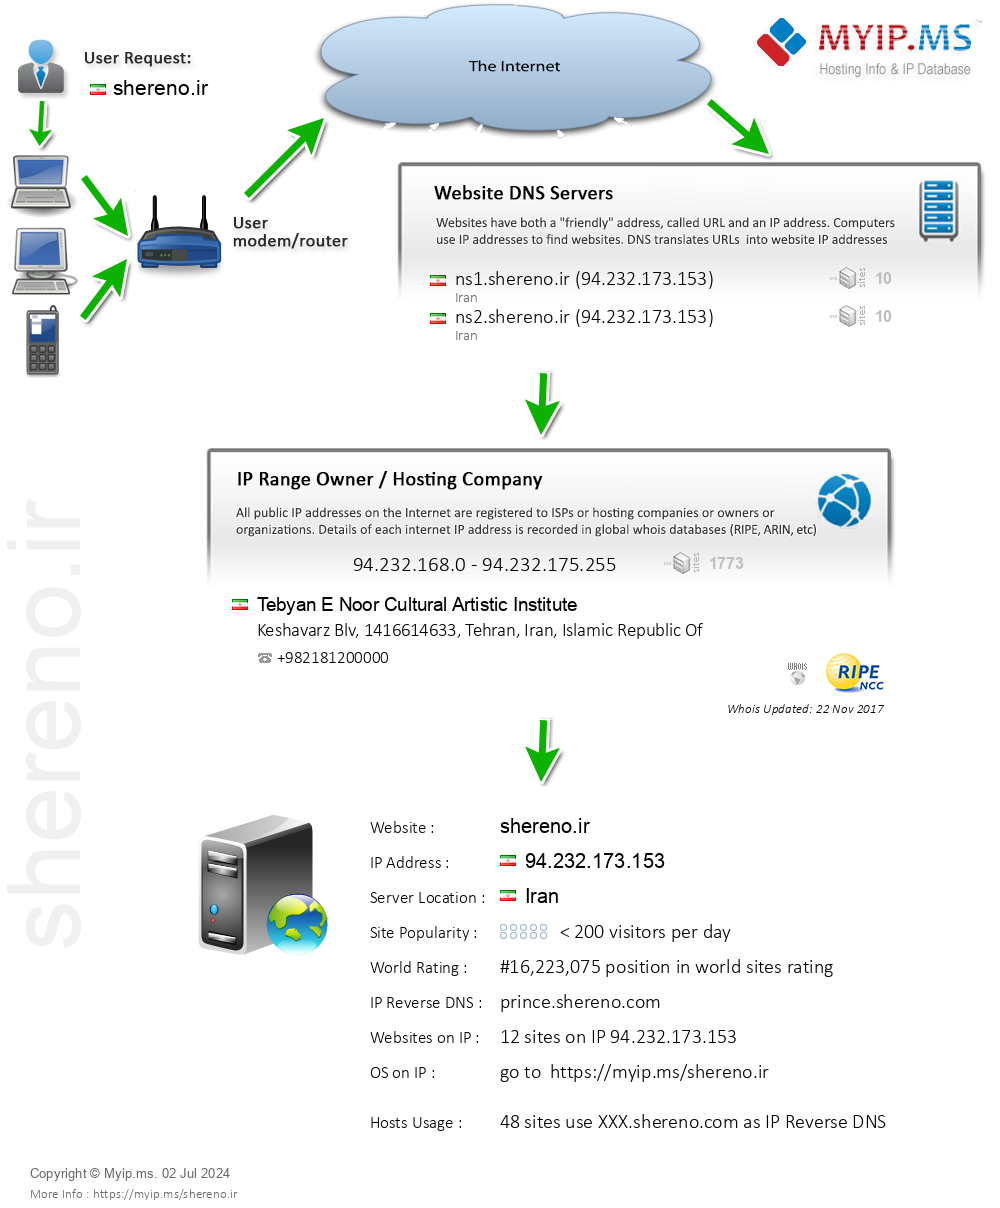 Shereno.ir - Website Hosting Visual IP Diagram